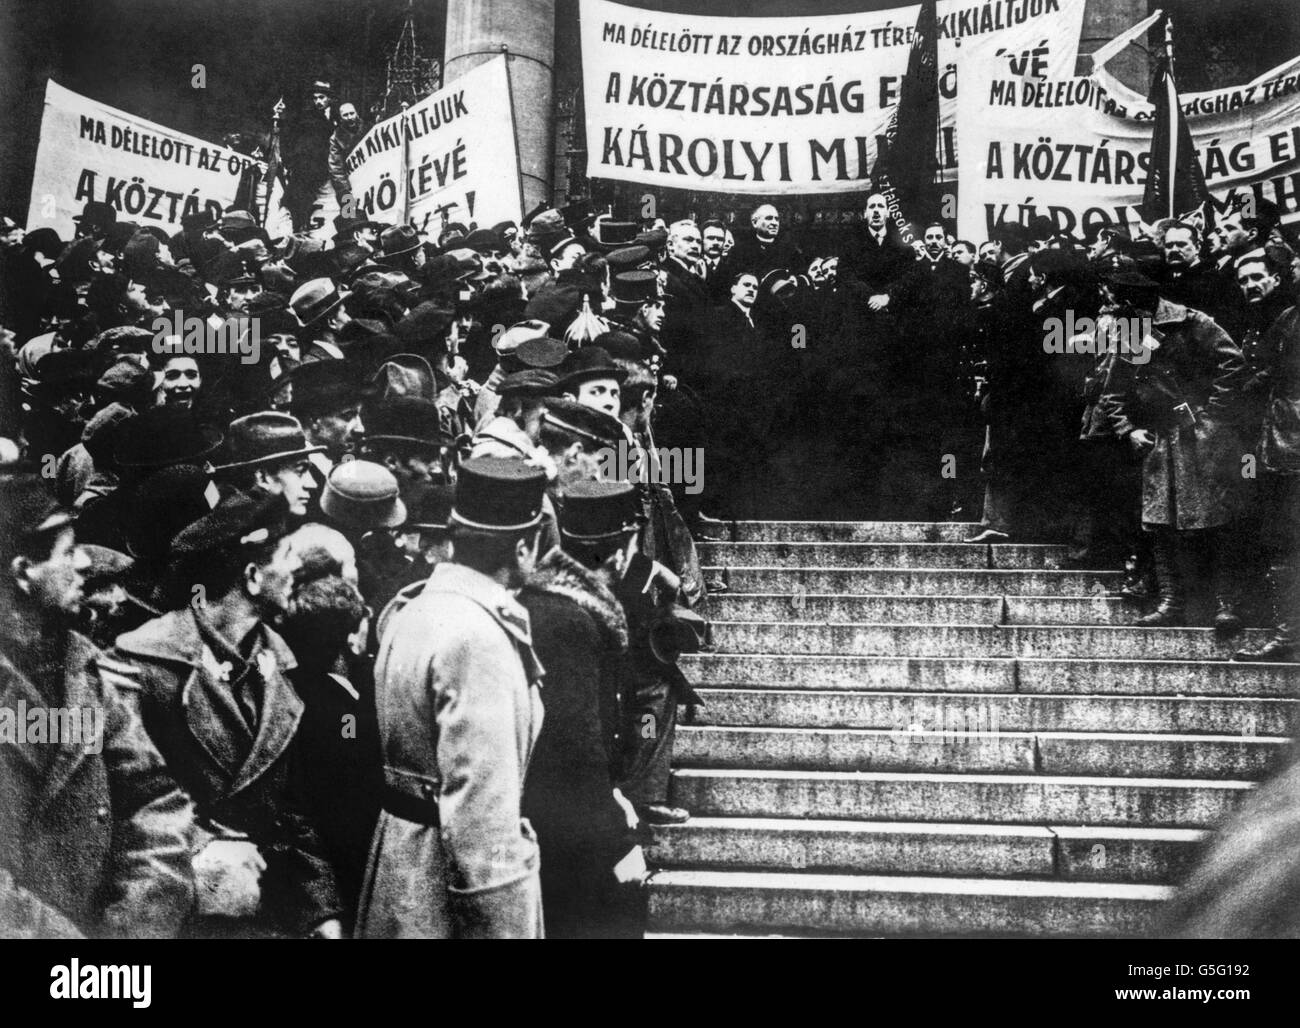 La Prima guerra mondiale - Karolyi Mihaly - Ungheria Foto Stock